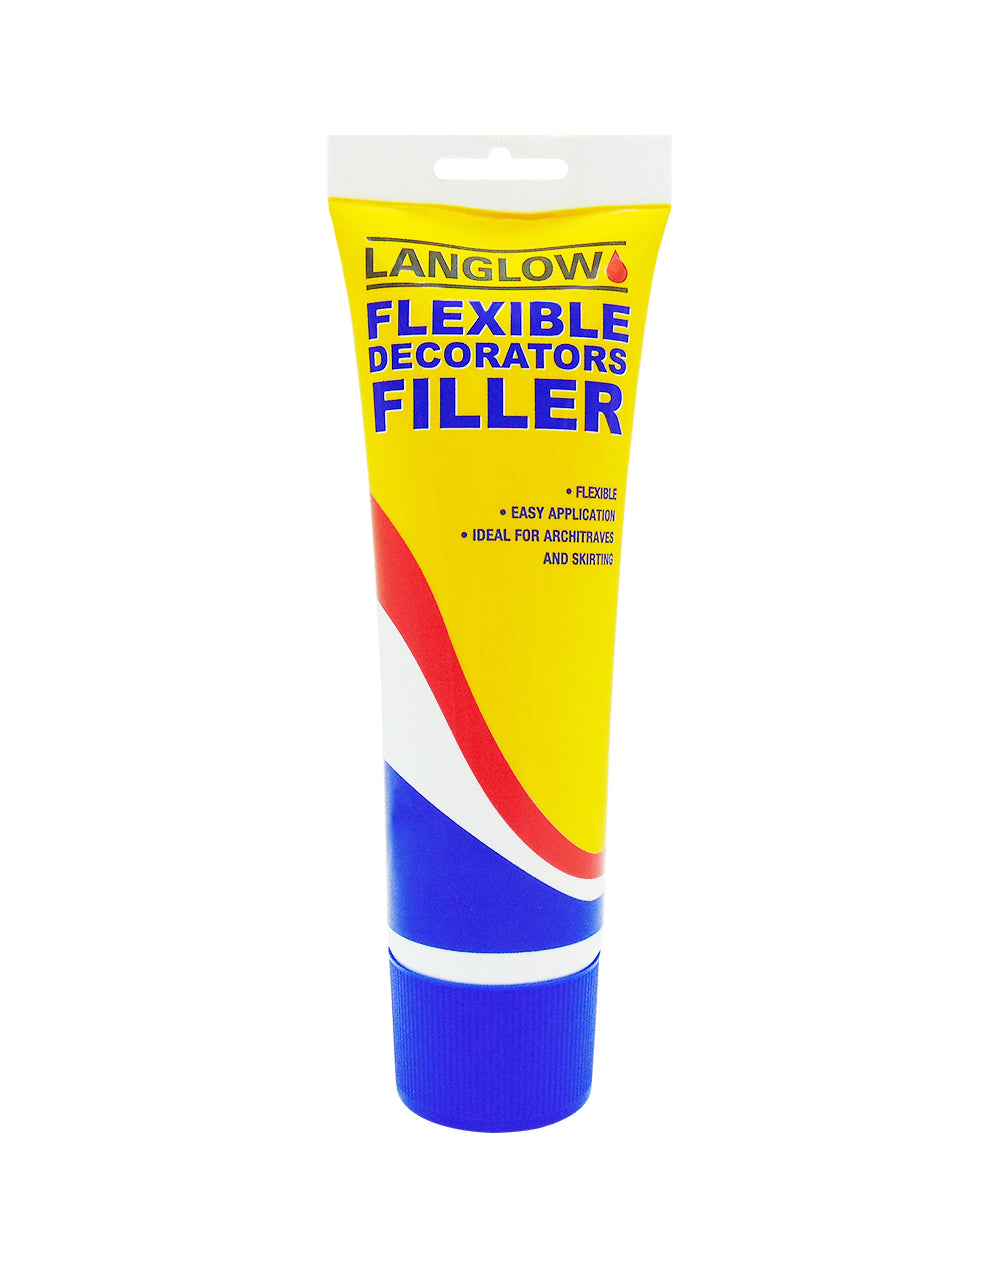 Palace Flexible Decorators Filler (tube)